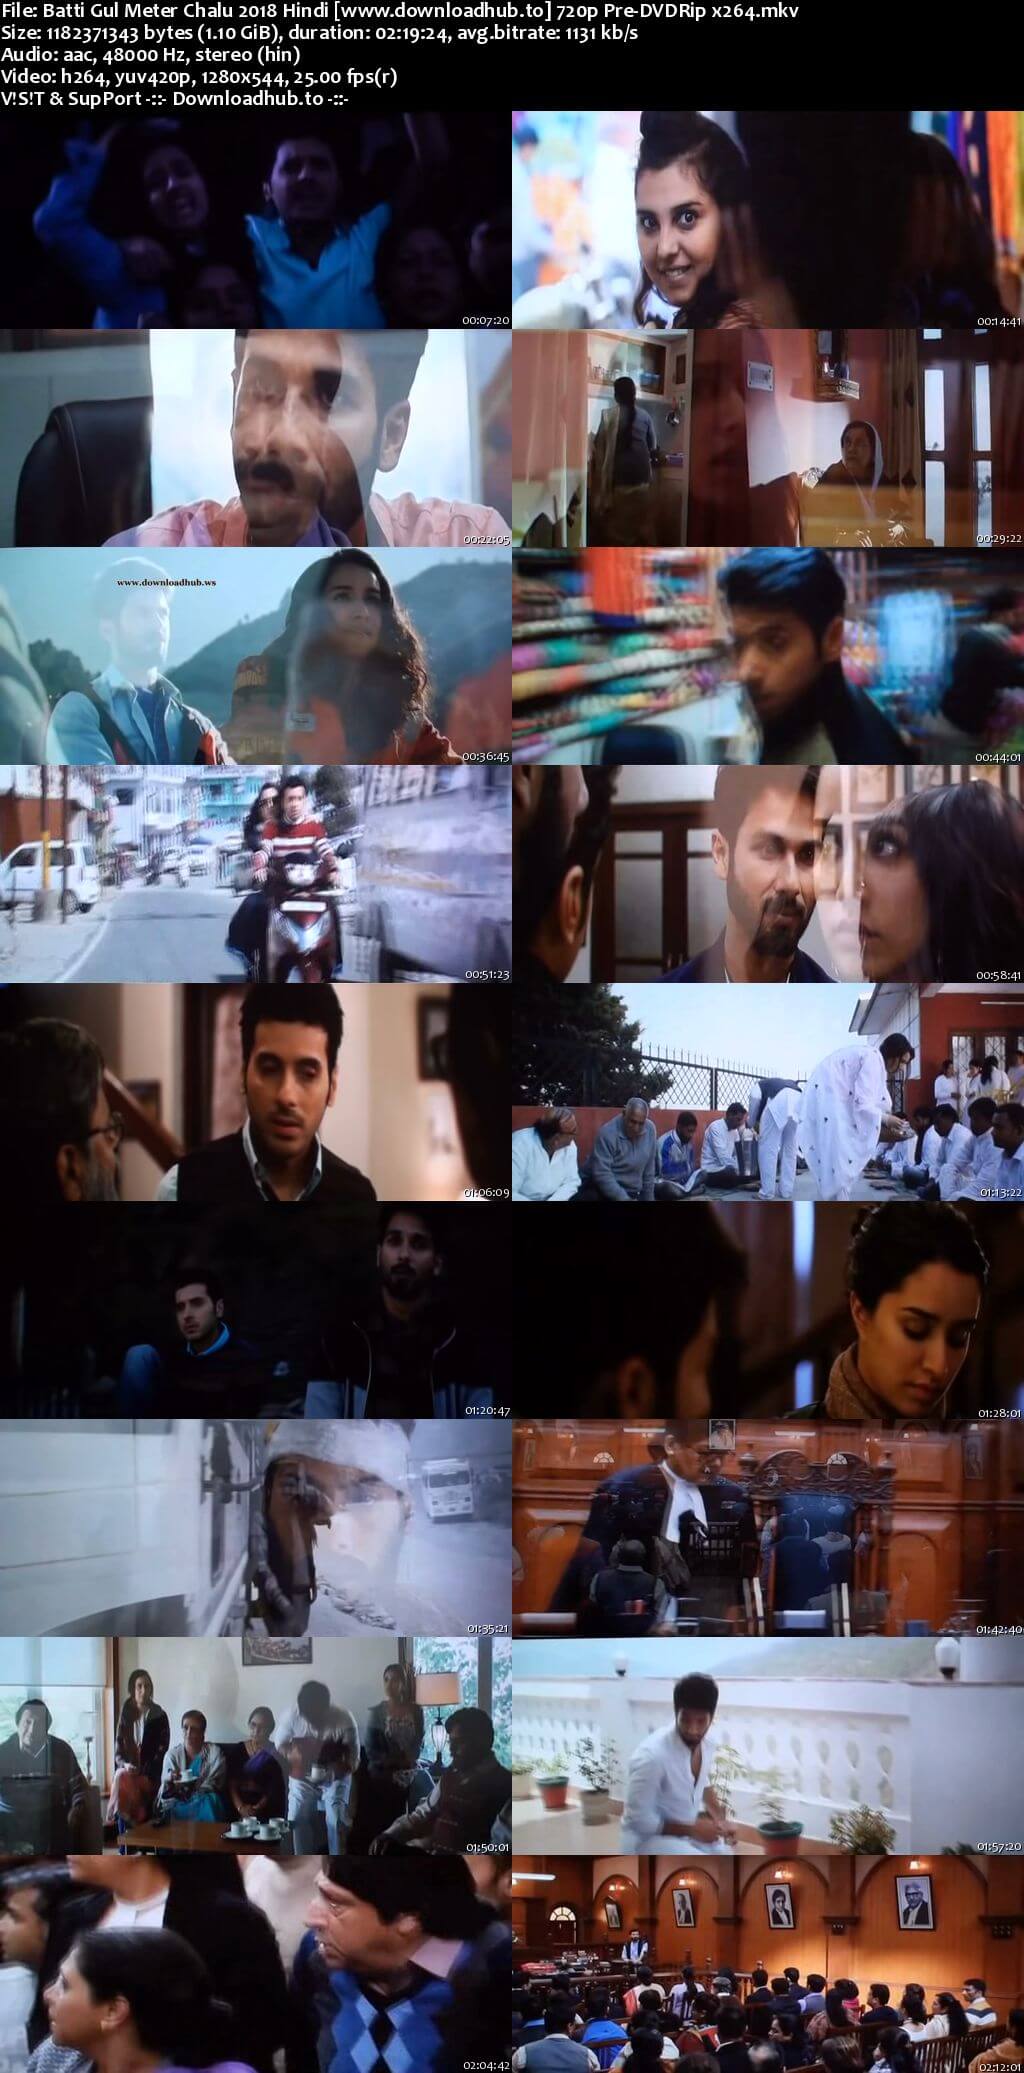 Batti Gul Meter Chalu 2018 Hindi 720p Pre-DVDRip x264